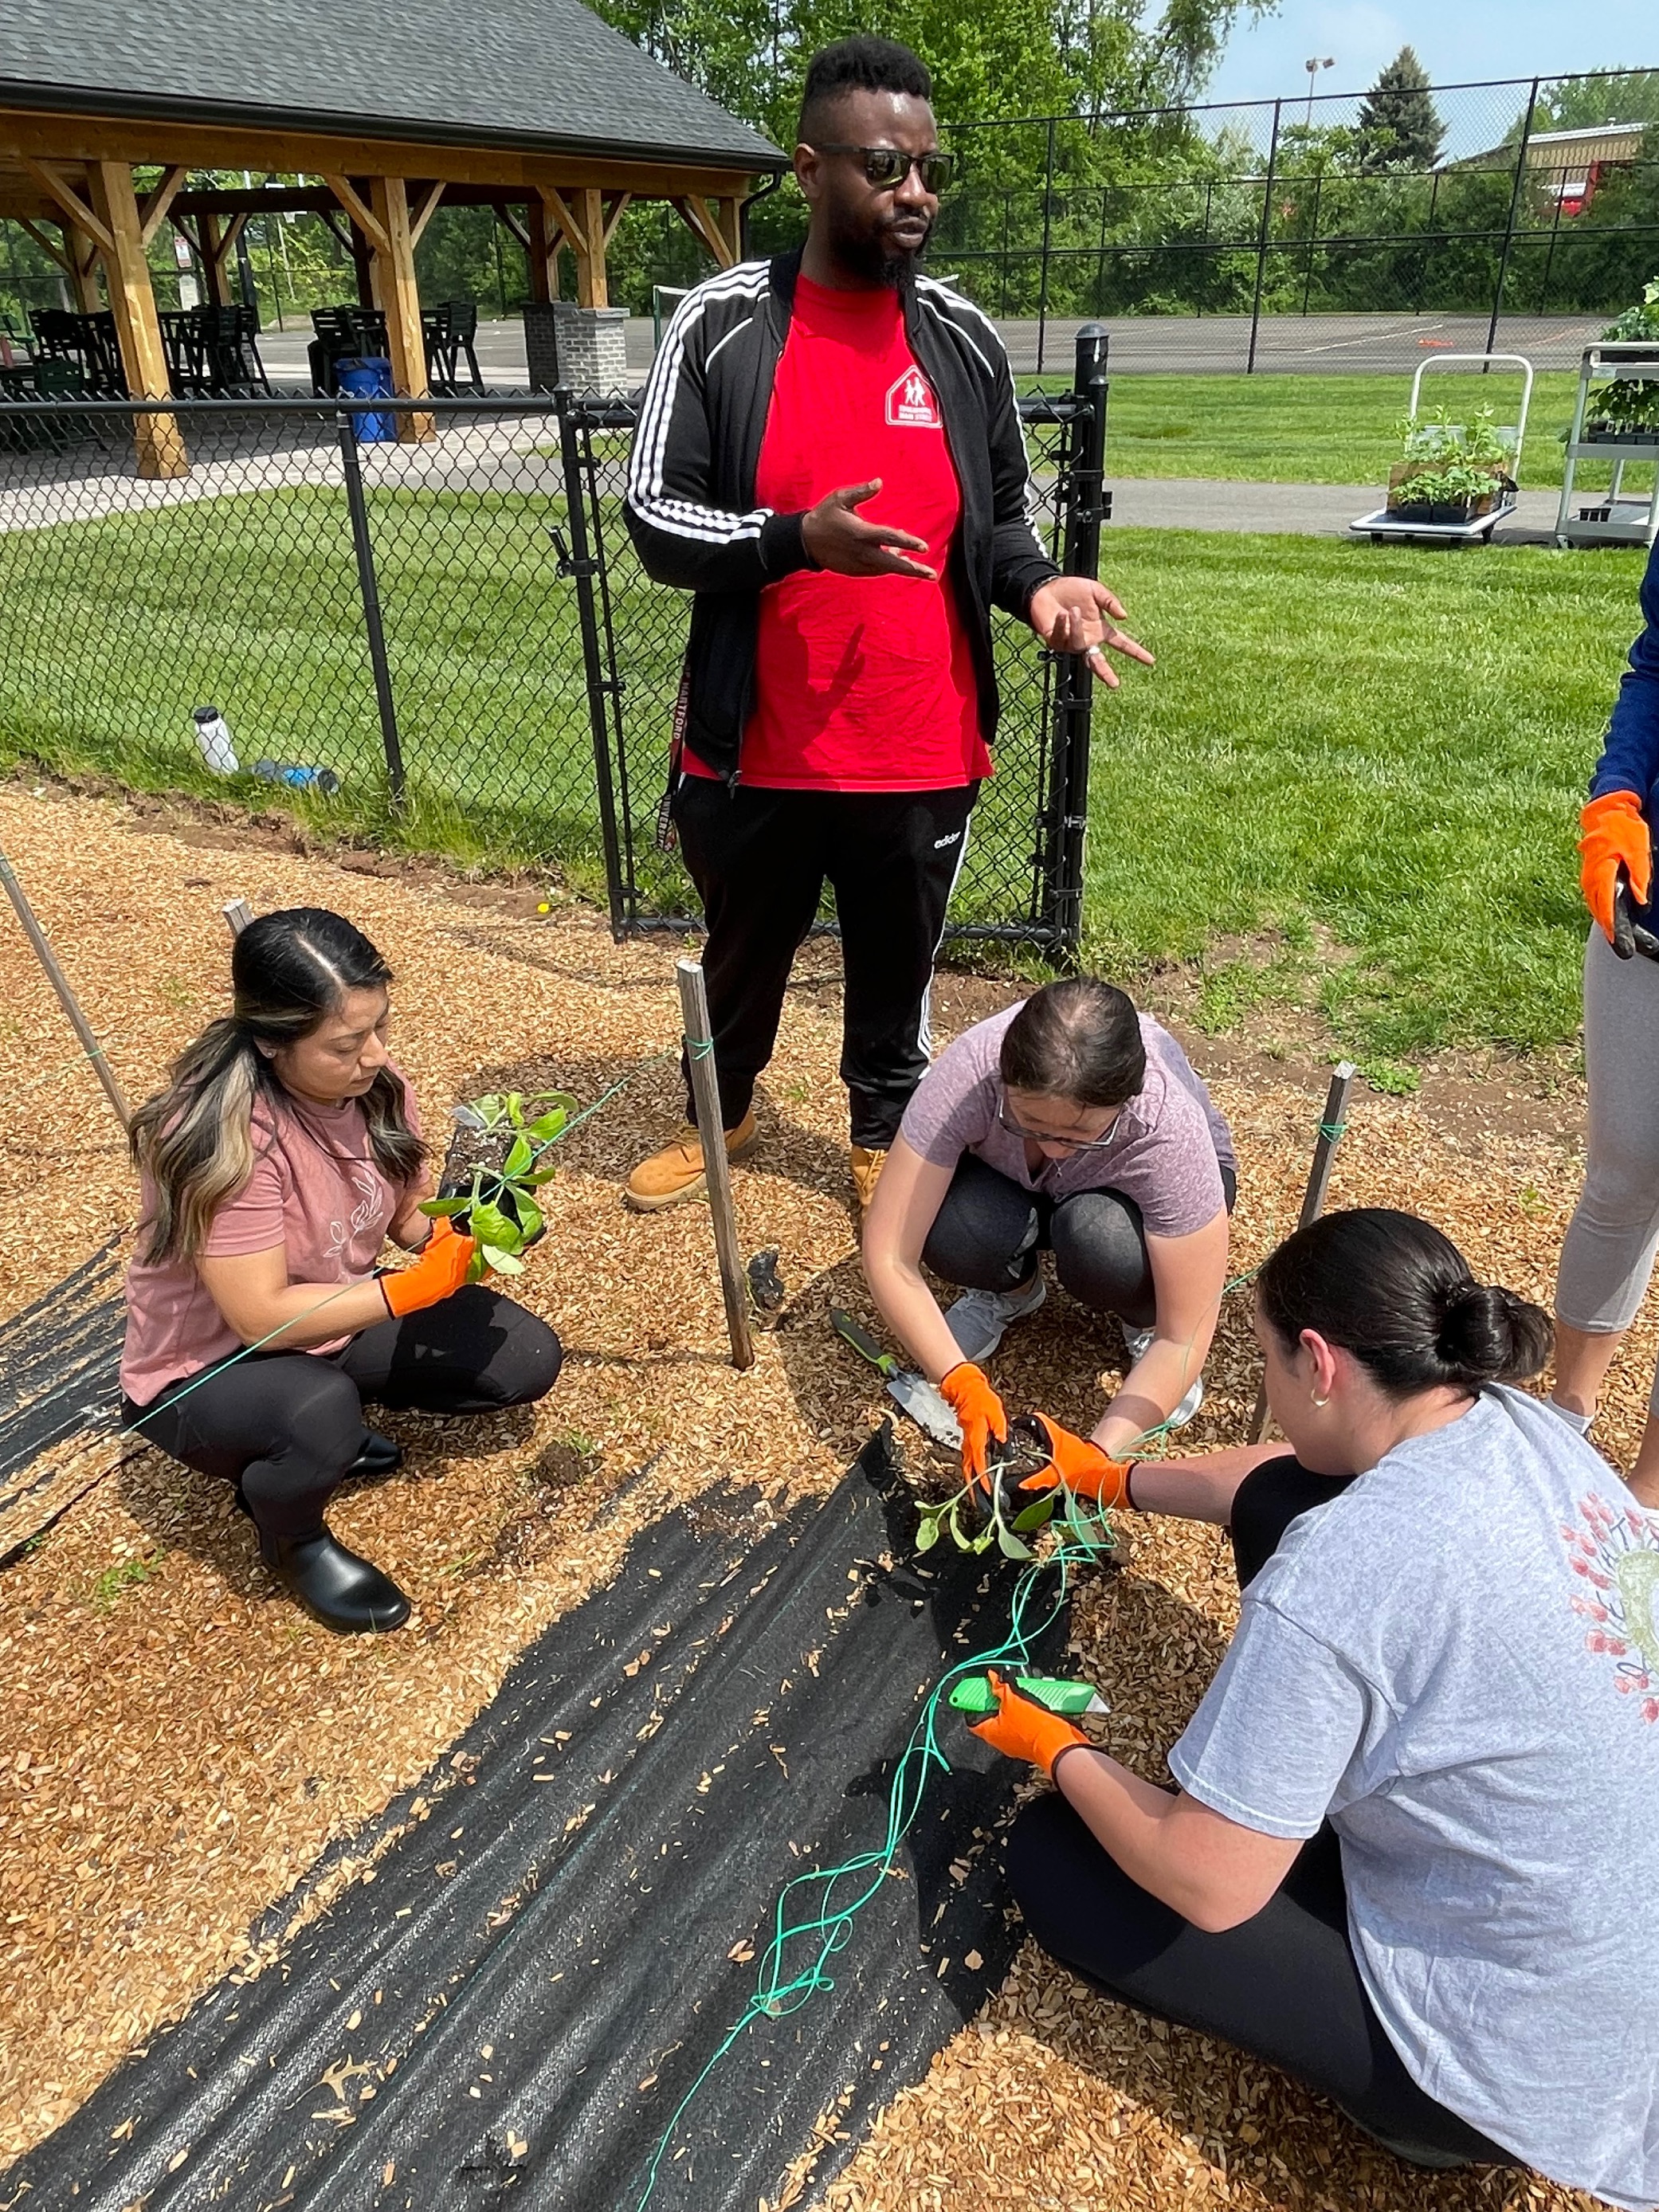 HAI Group employees help prepare the company's community garden